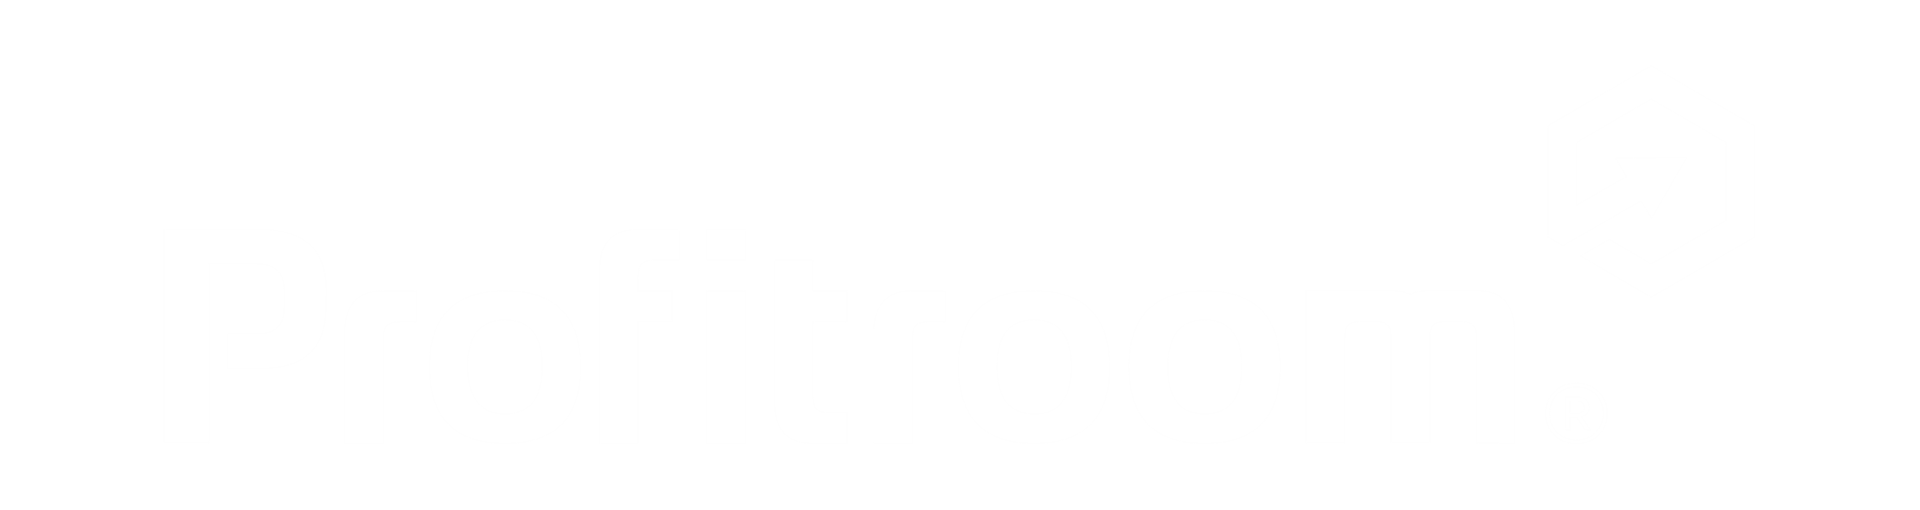 Profitroom_Logo_RGB-02 (hopea).png